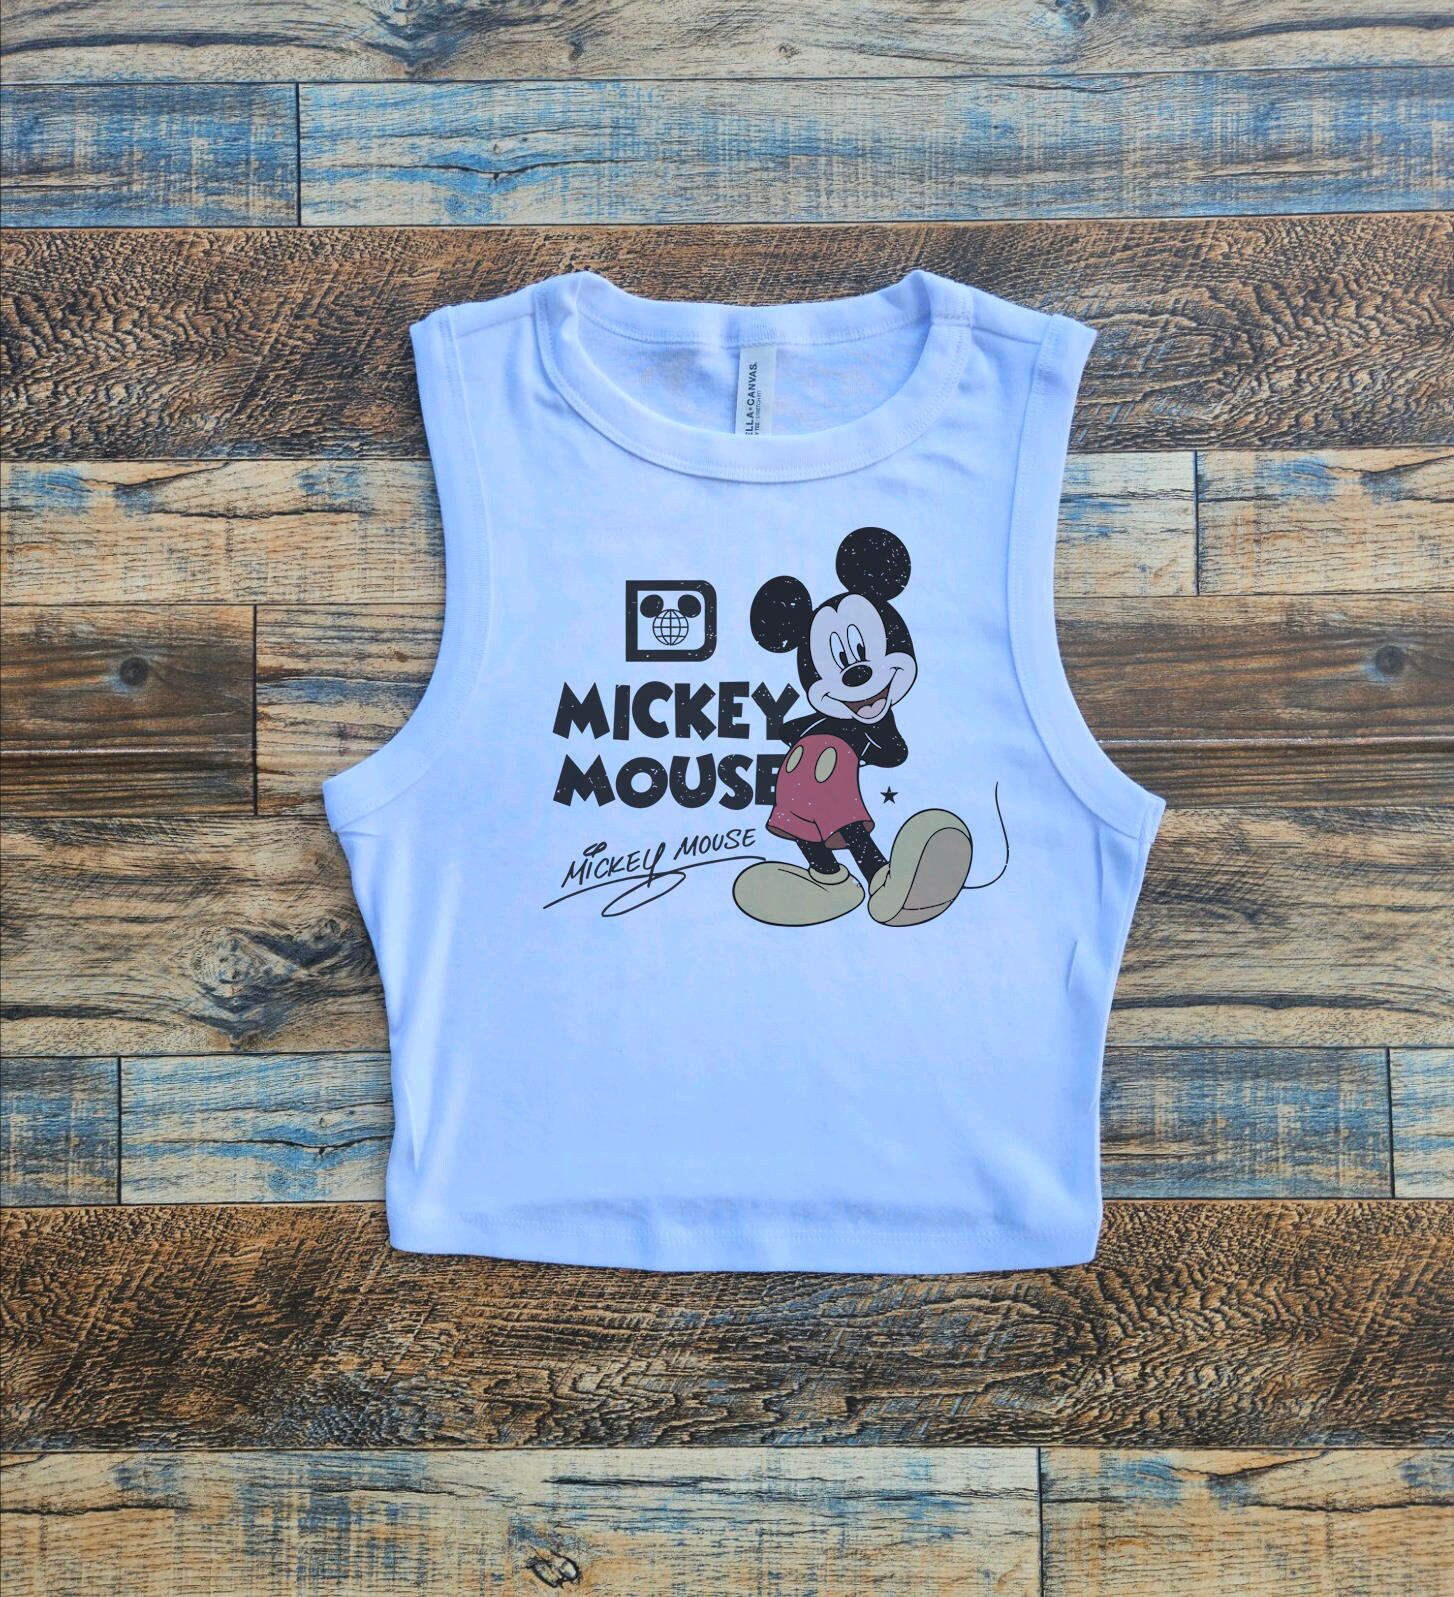 Retro Mickey Crop Tank, Girls Mickey Mouse Tank Top, Limited old school baby tee, Disney cute shirt